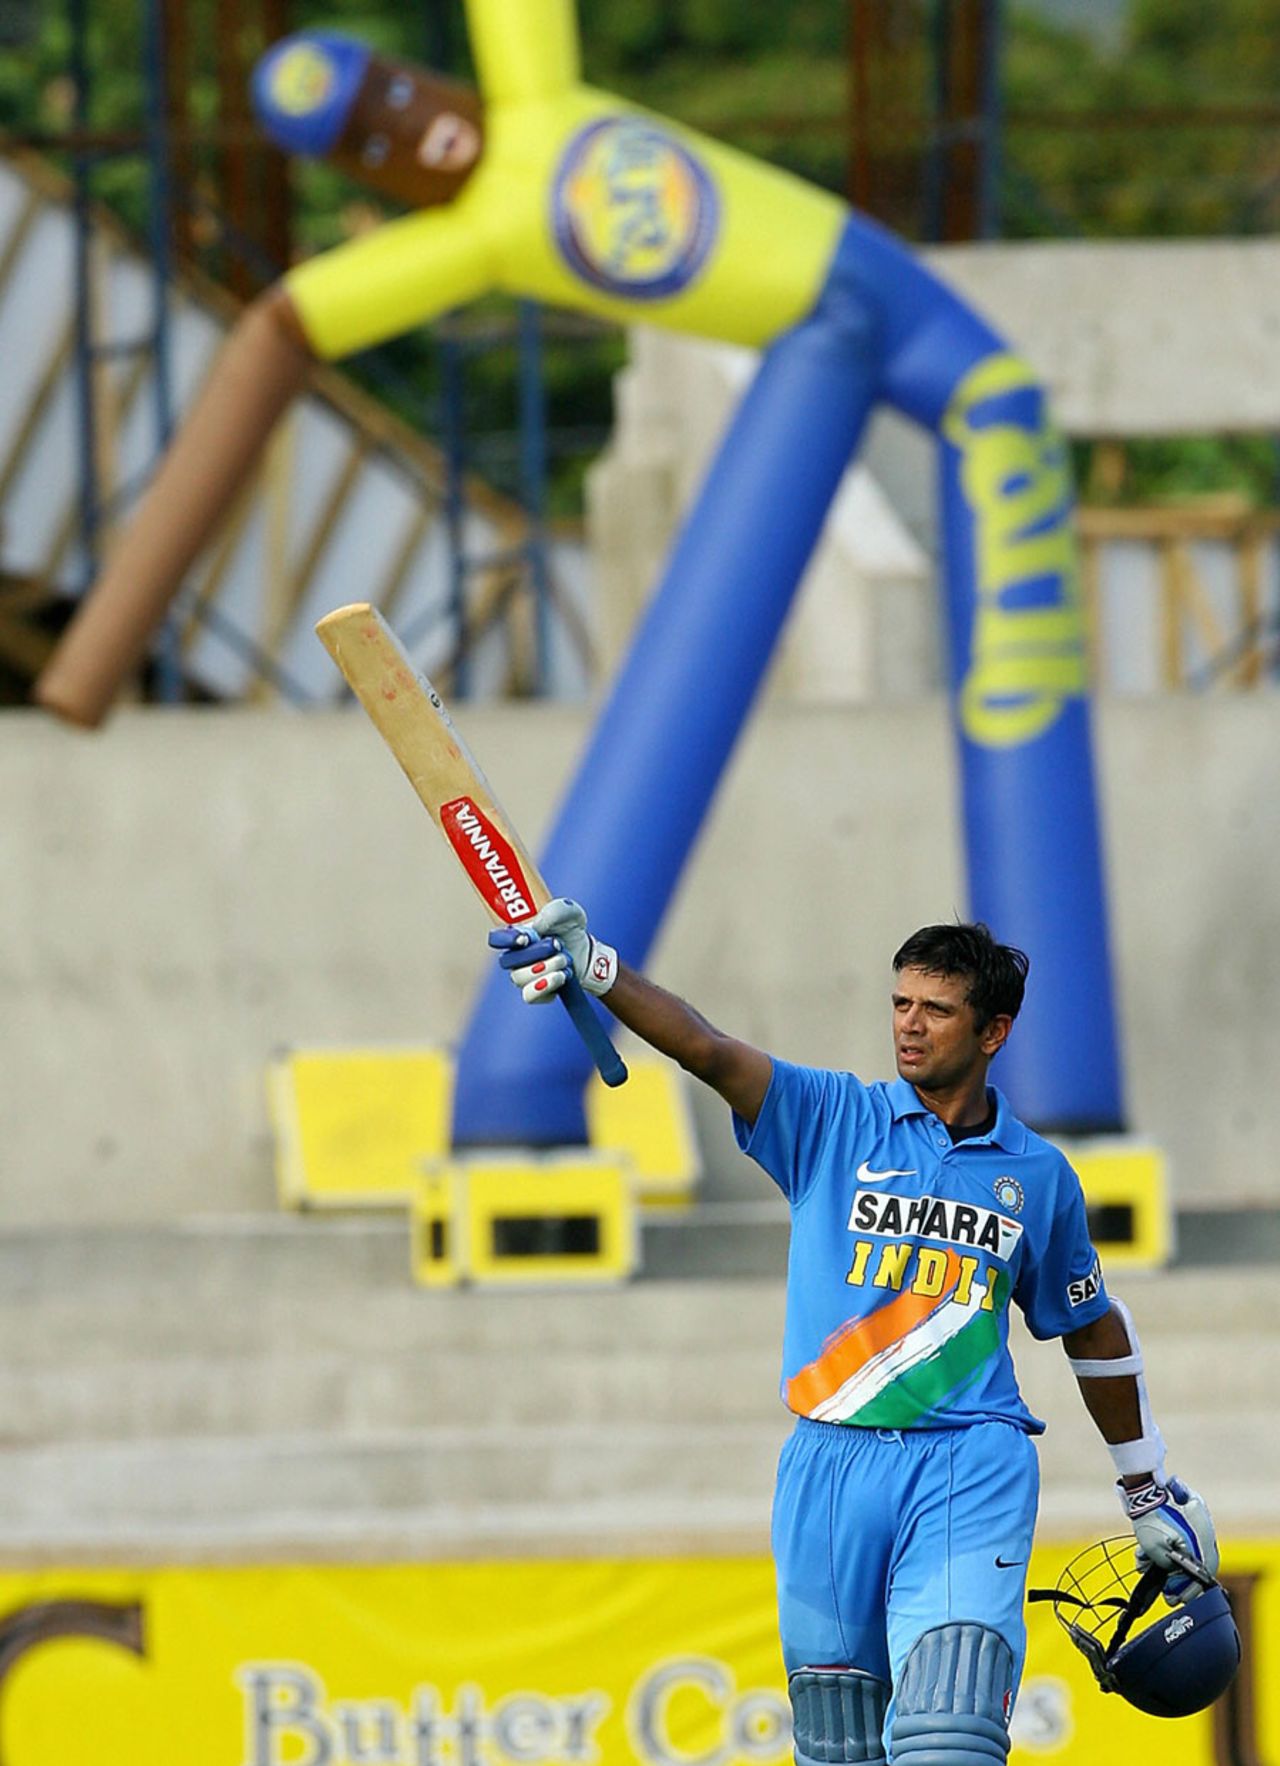 Rahul Dravid notched up a fine hundred at Kingston, West Indies v India, 1st ODI, Kingston, May 18, 2006